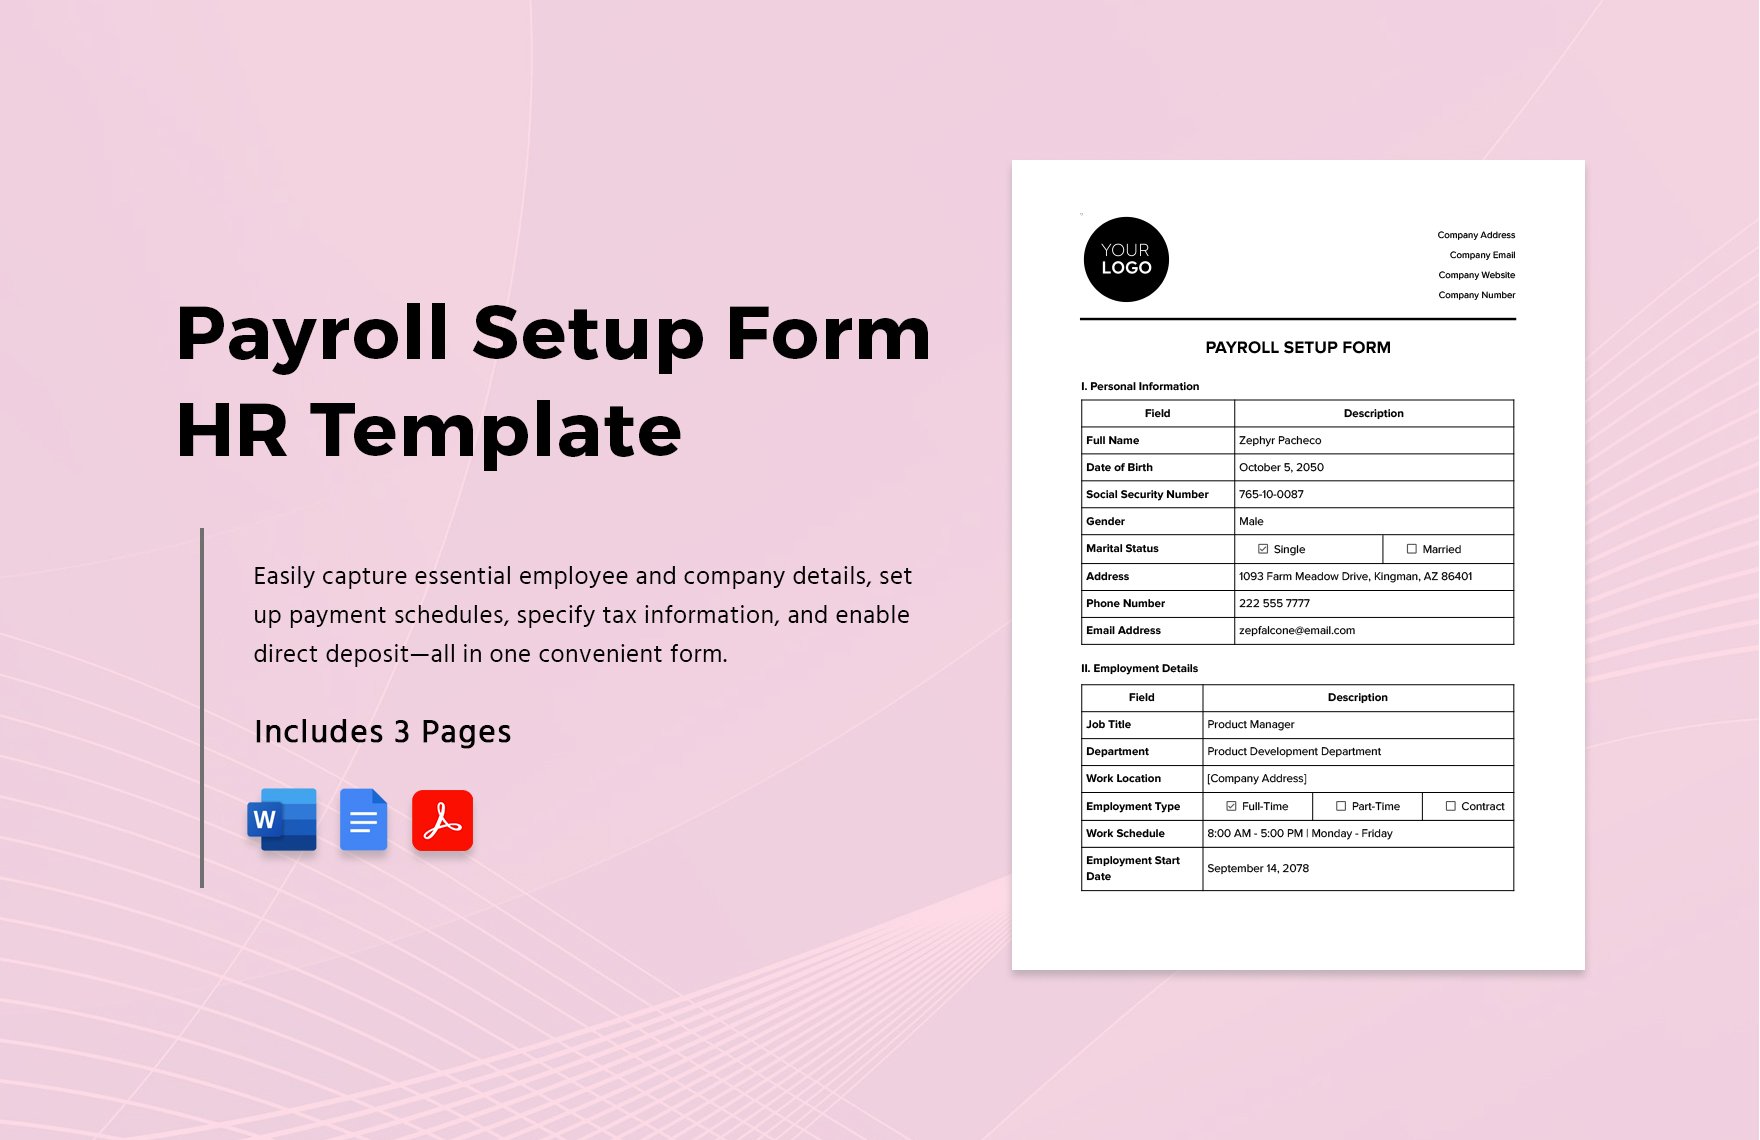 Payroll Setup Form HR Template in Word, Google Docs, PDF